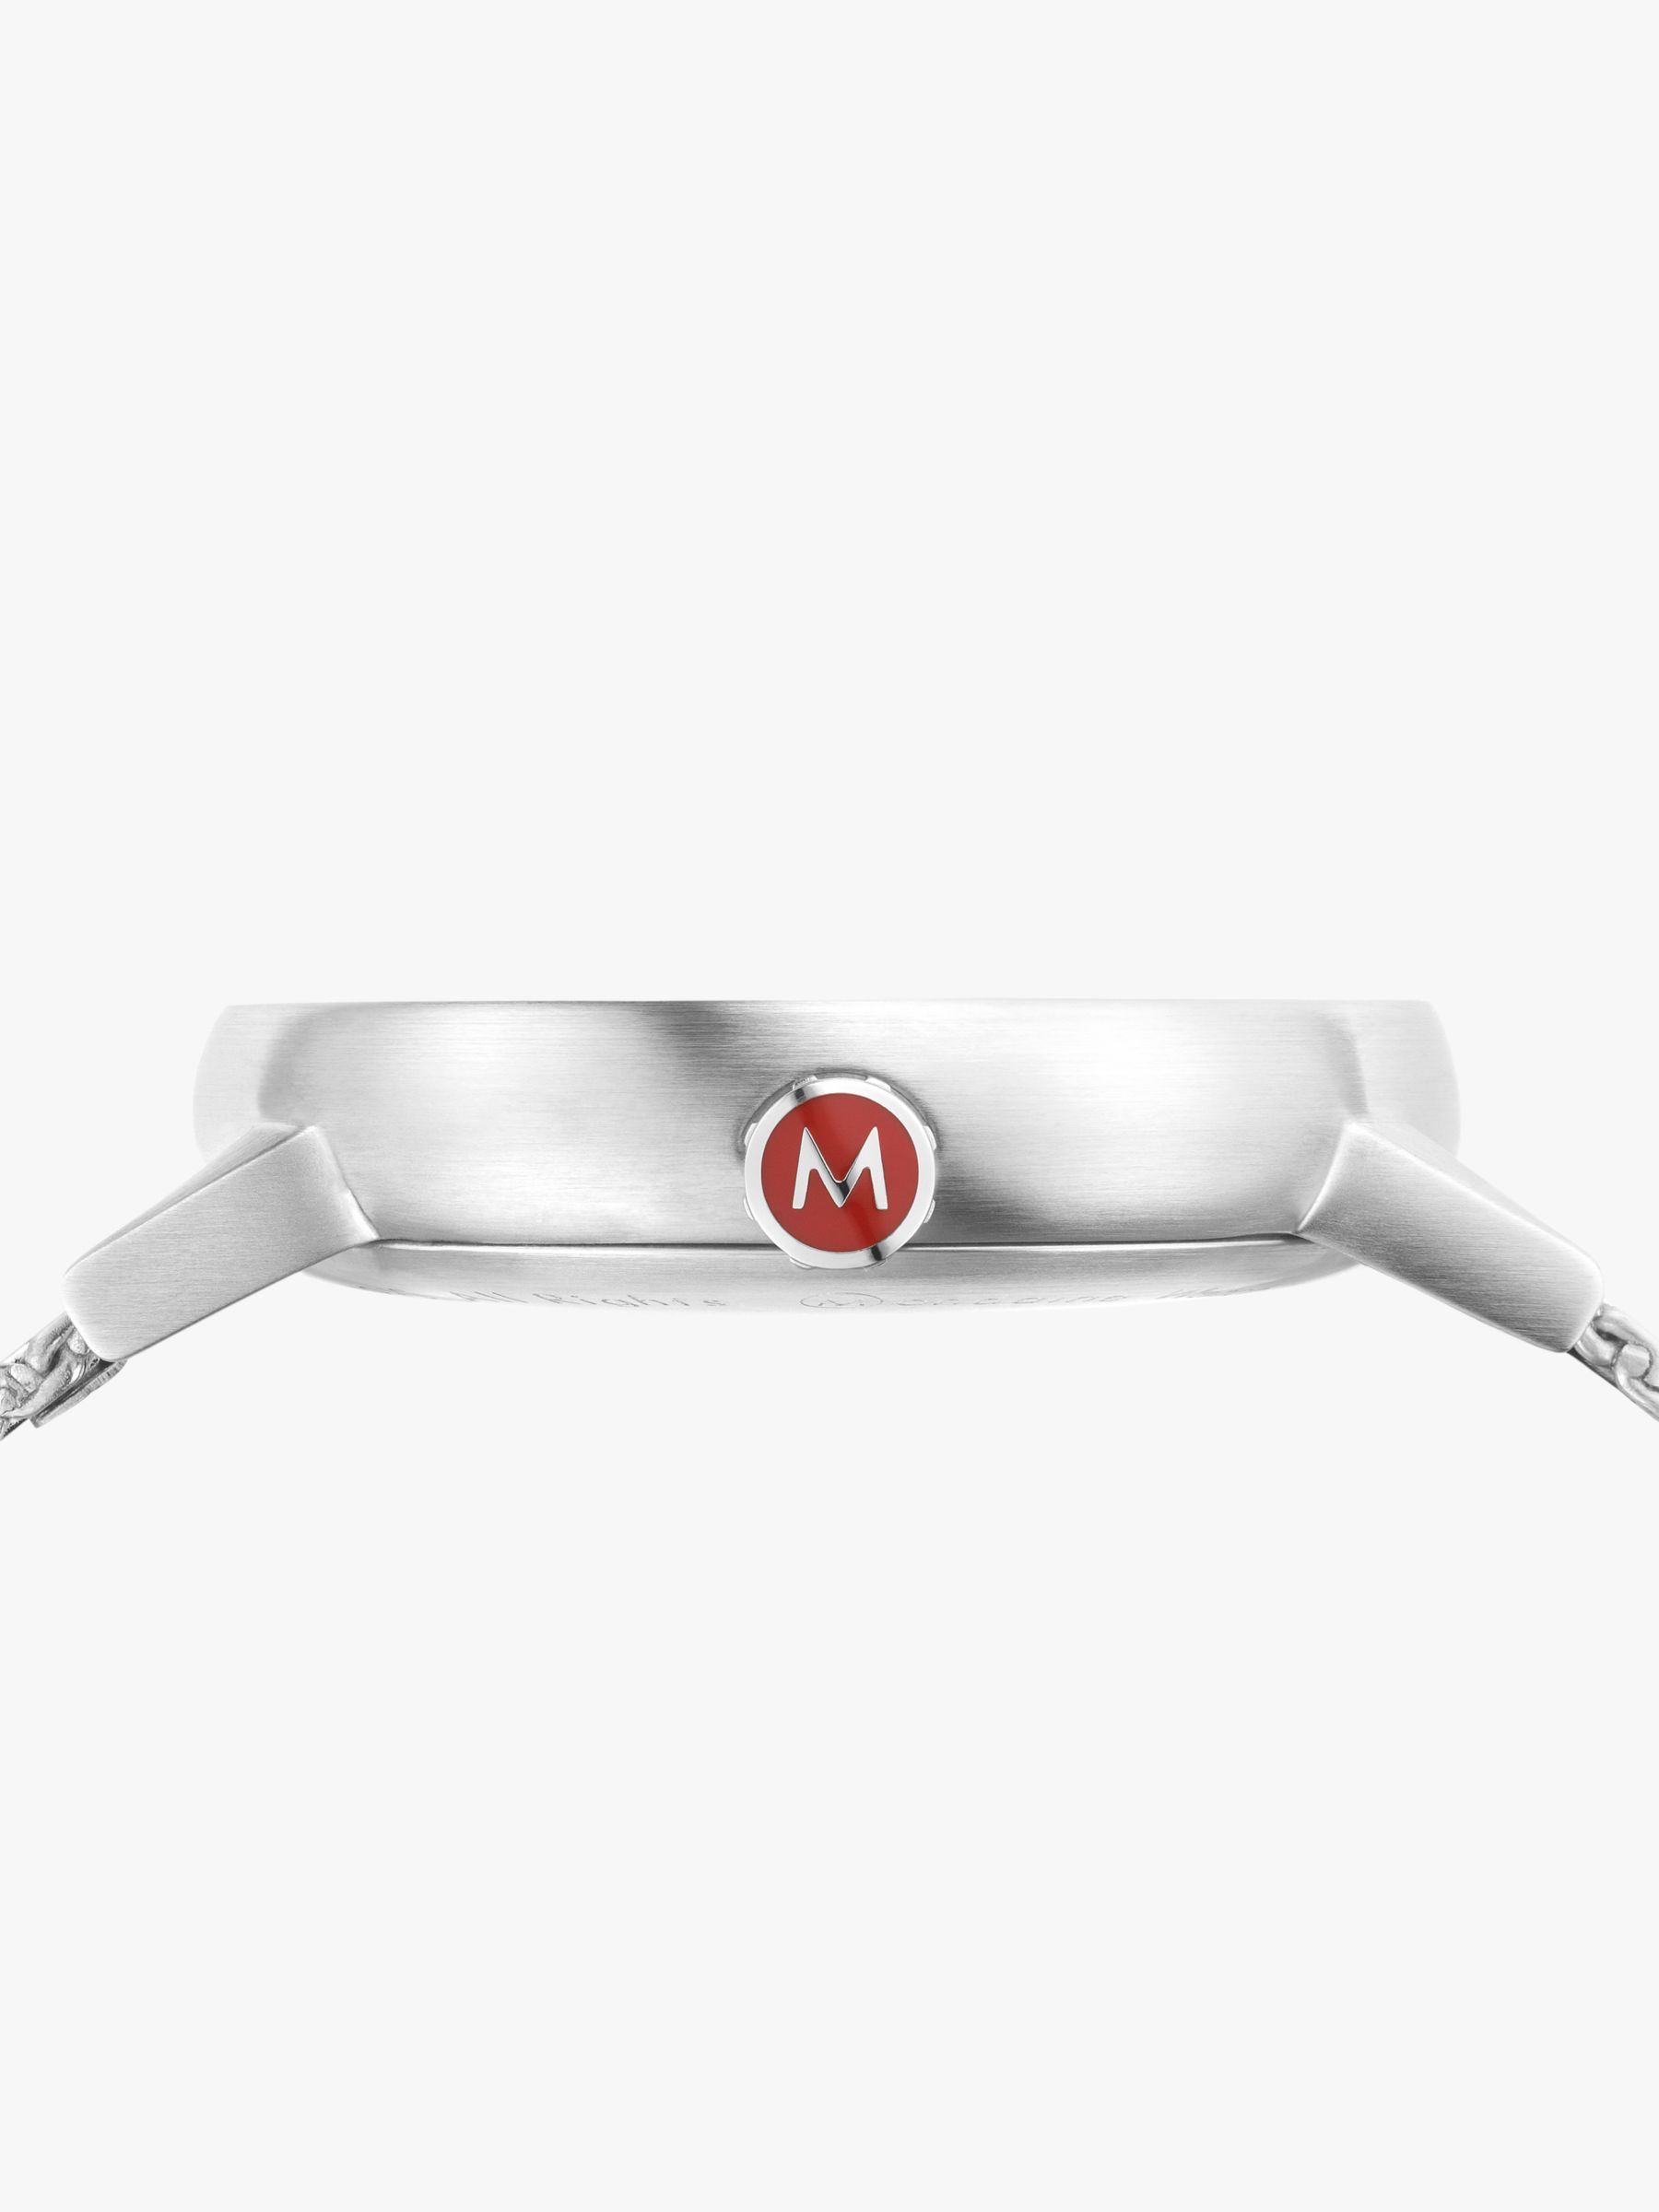 Buy Mondaine MSE.40210.SM Unisex Evo 2 Date Mesh Bracelet Strap Watch, Silver/White Online at johnlewis.com